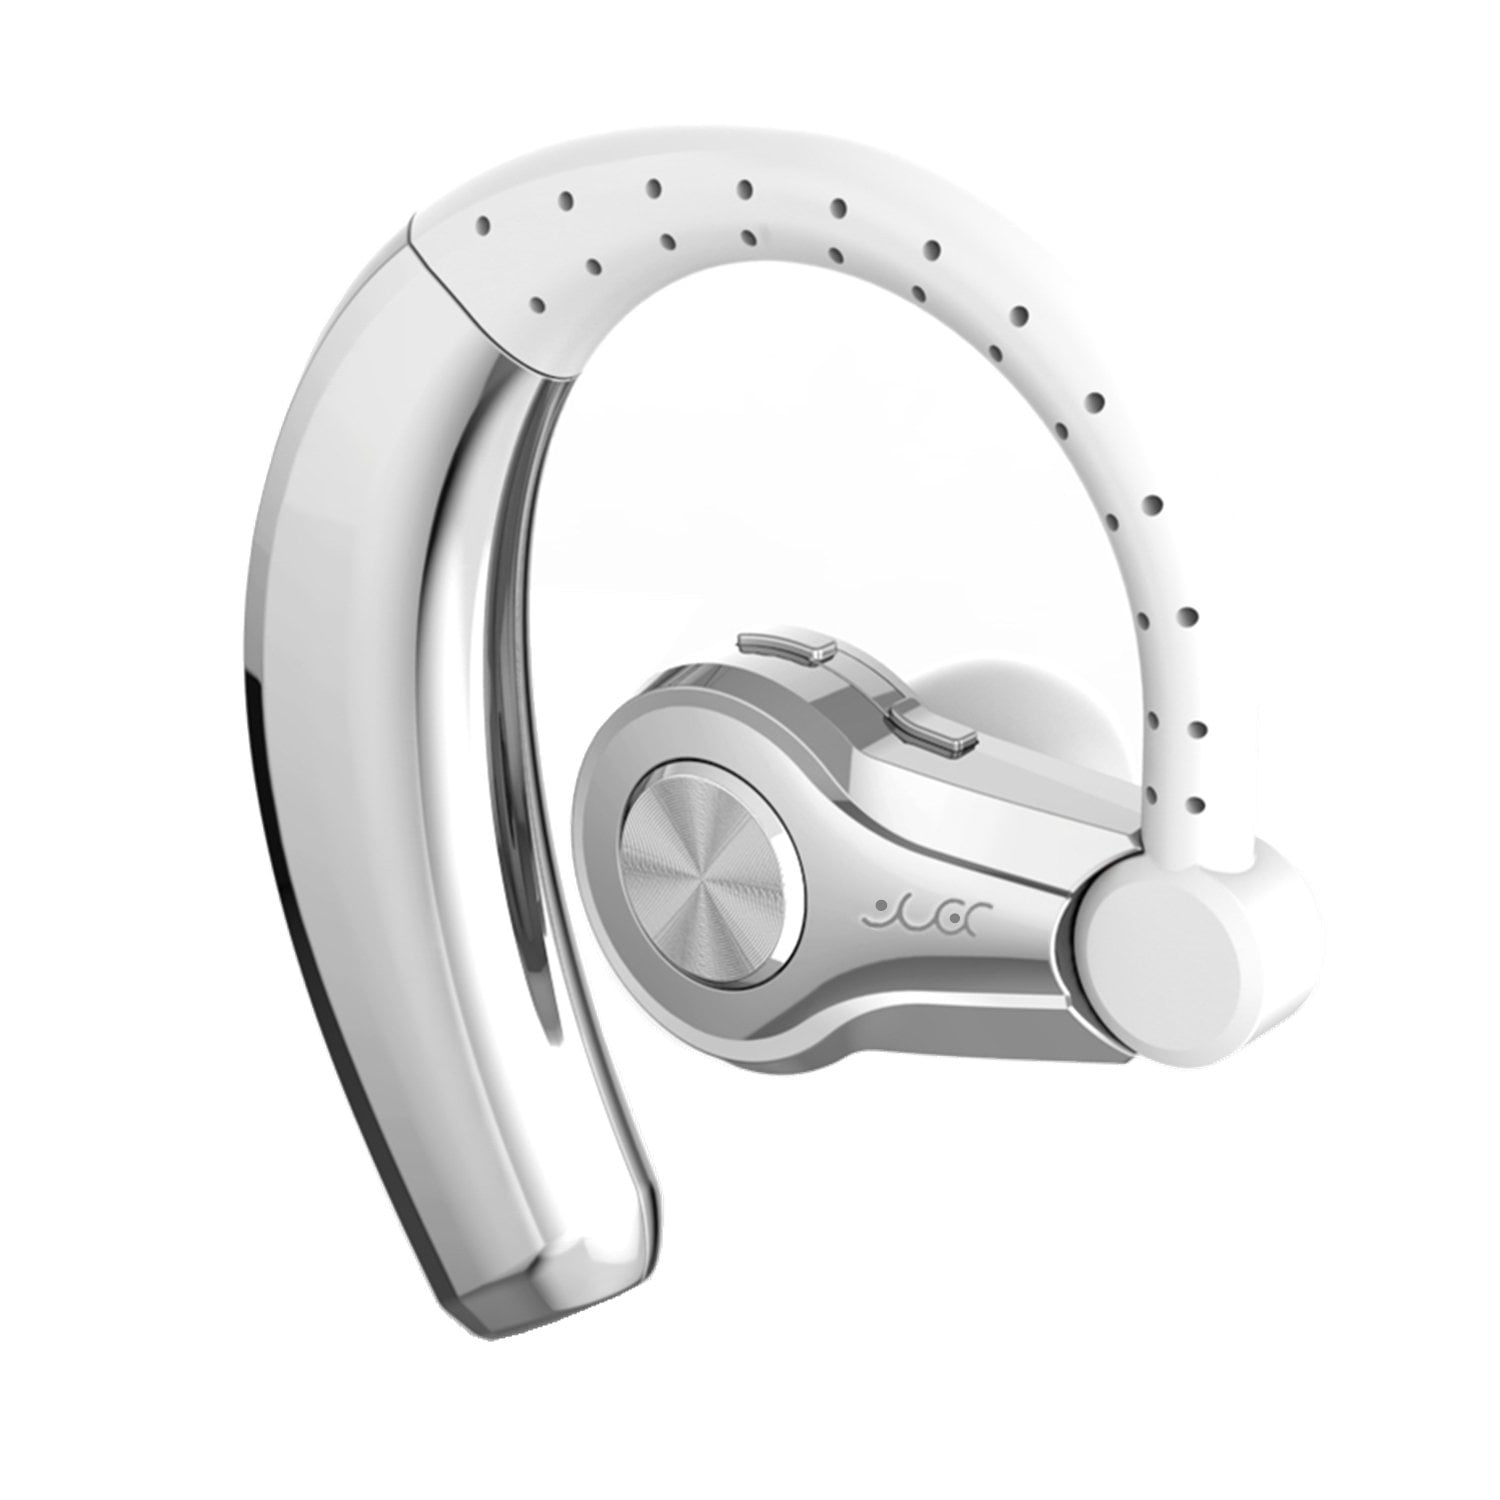 Details about   Mini Wireless Bluetooth Earphone in Ear Sport with Mic Handsfree Headset Earbuds 